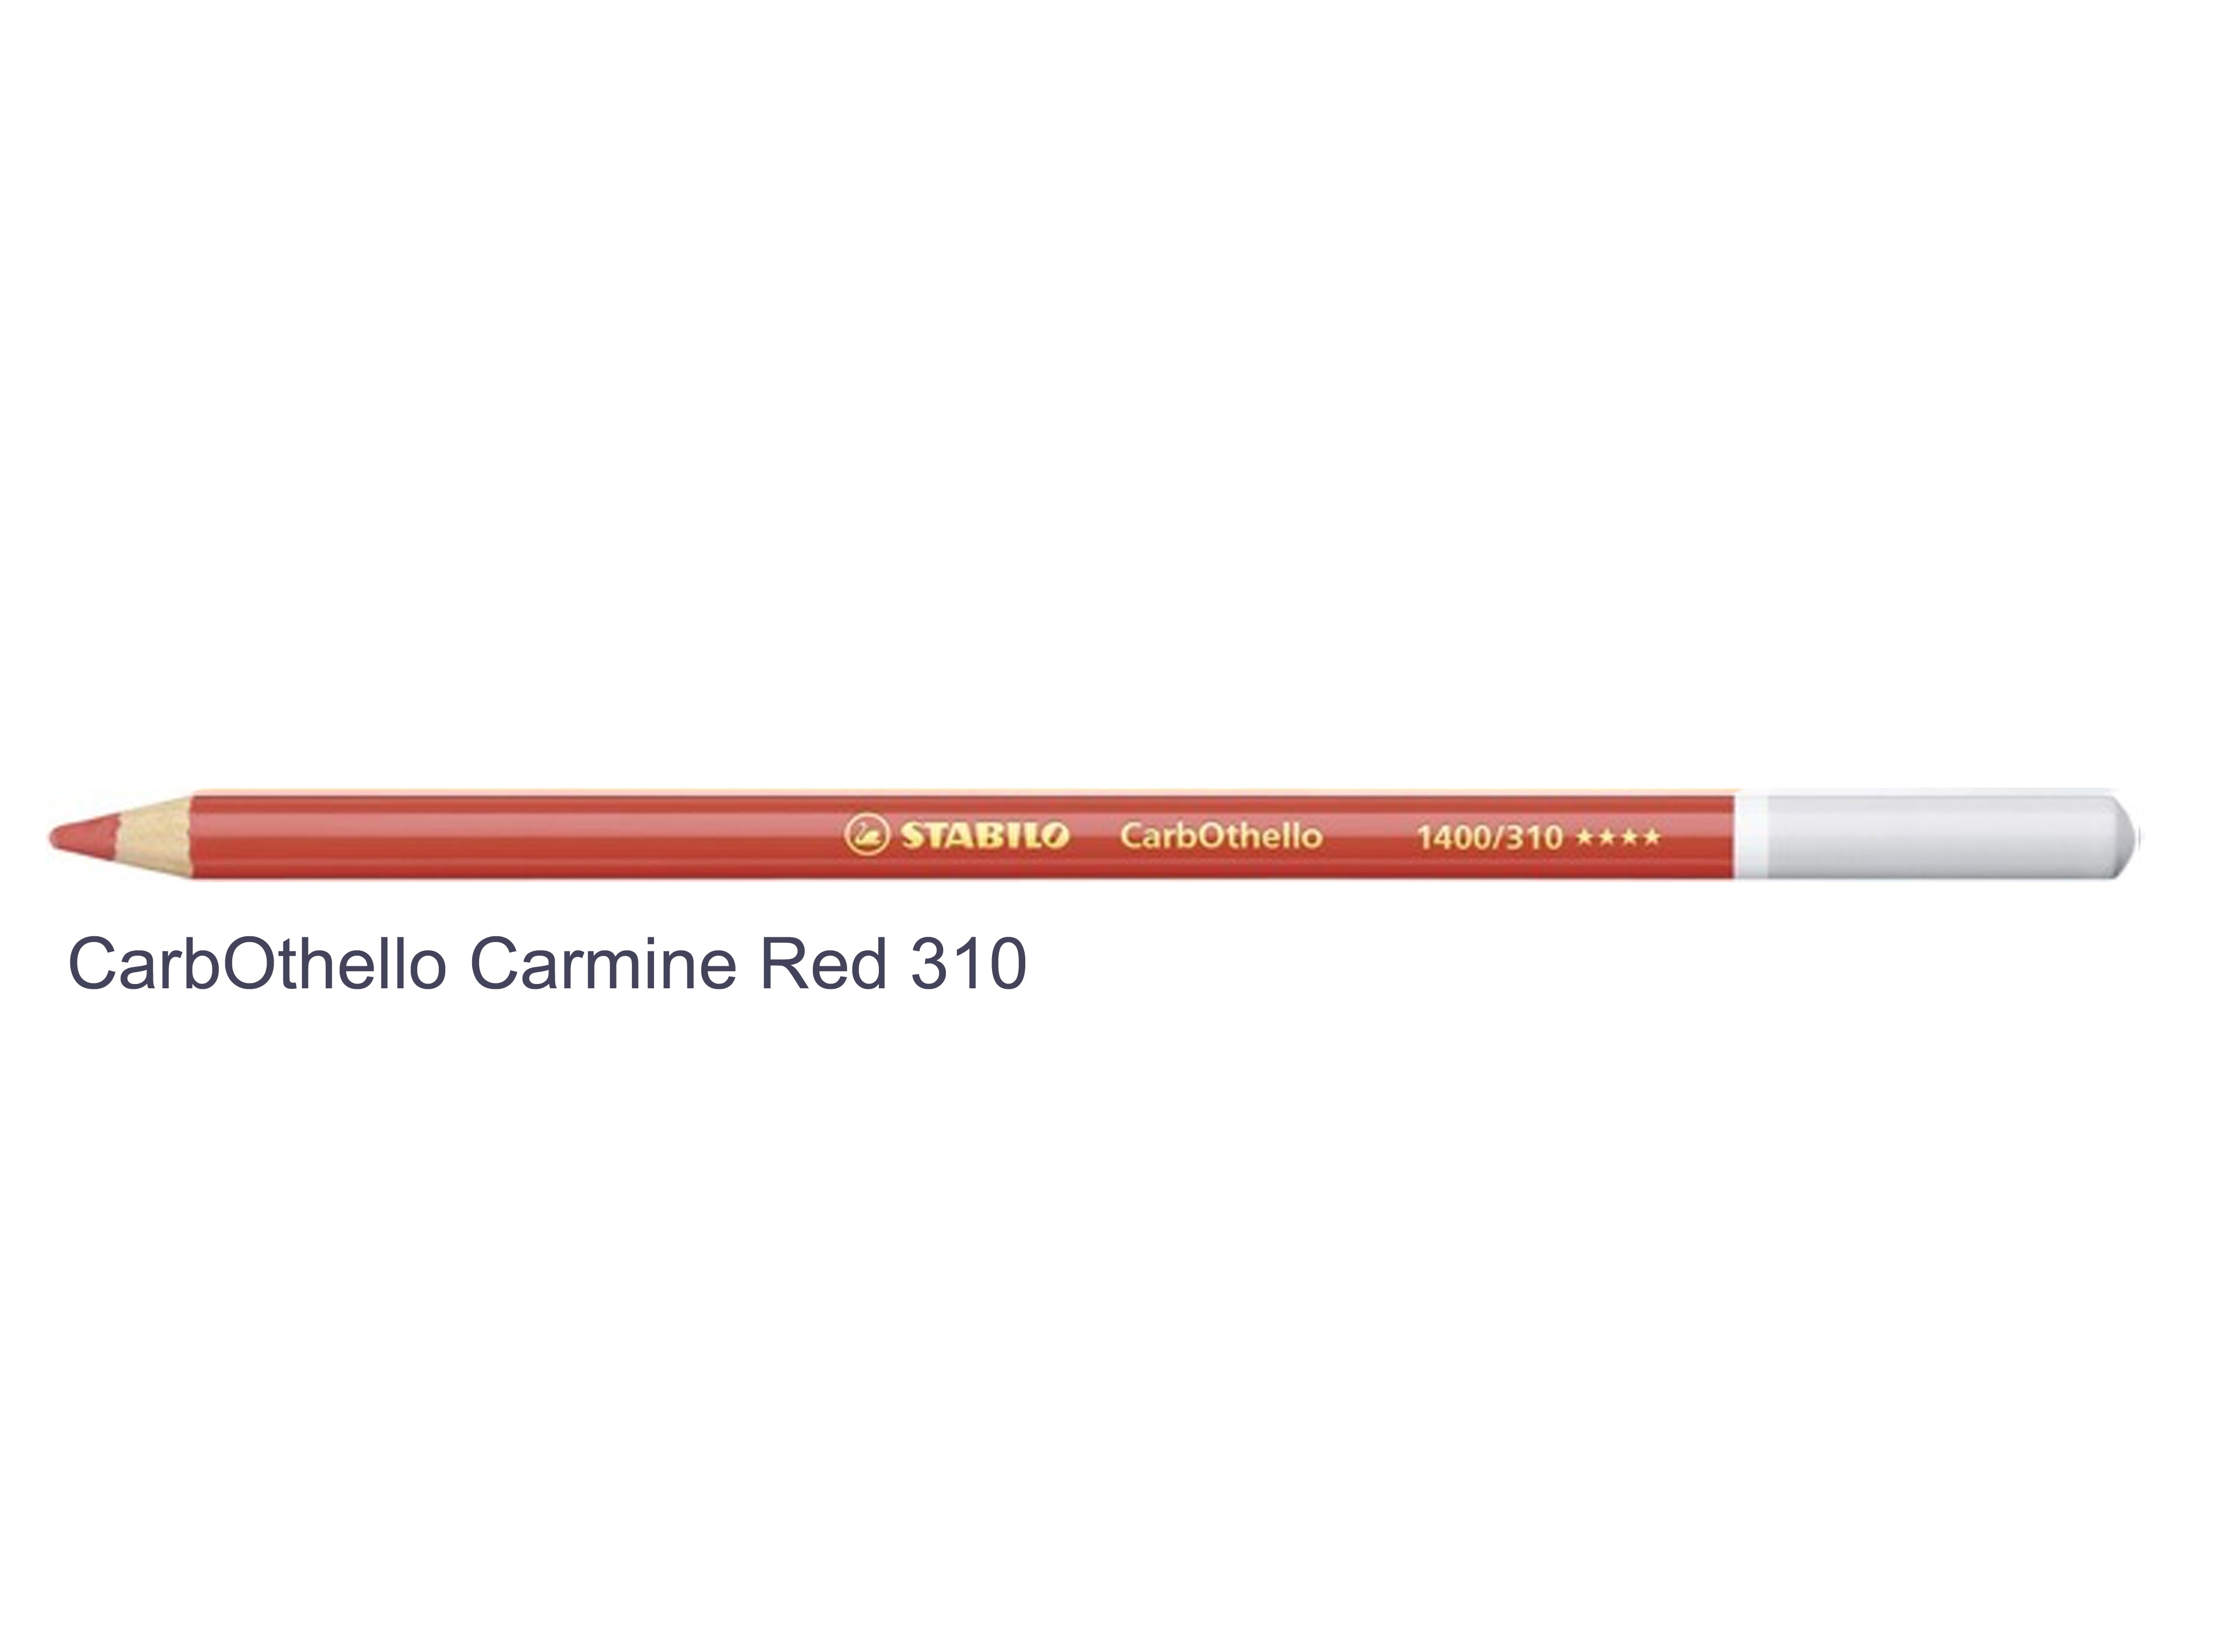 Carmine red 310 STABILO CarbOthello chalk-pastel pencils